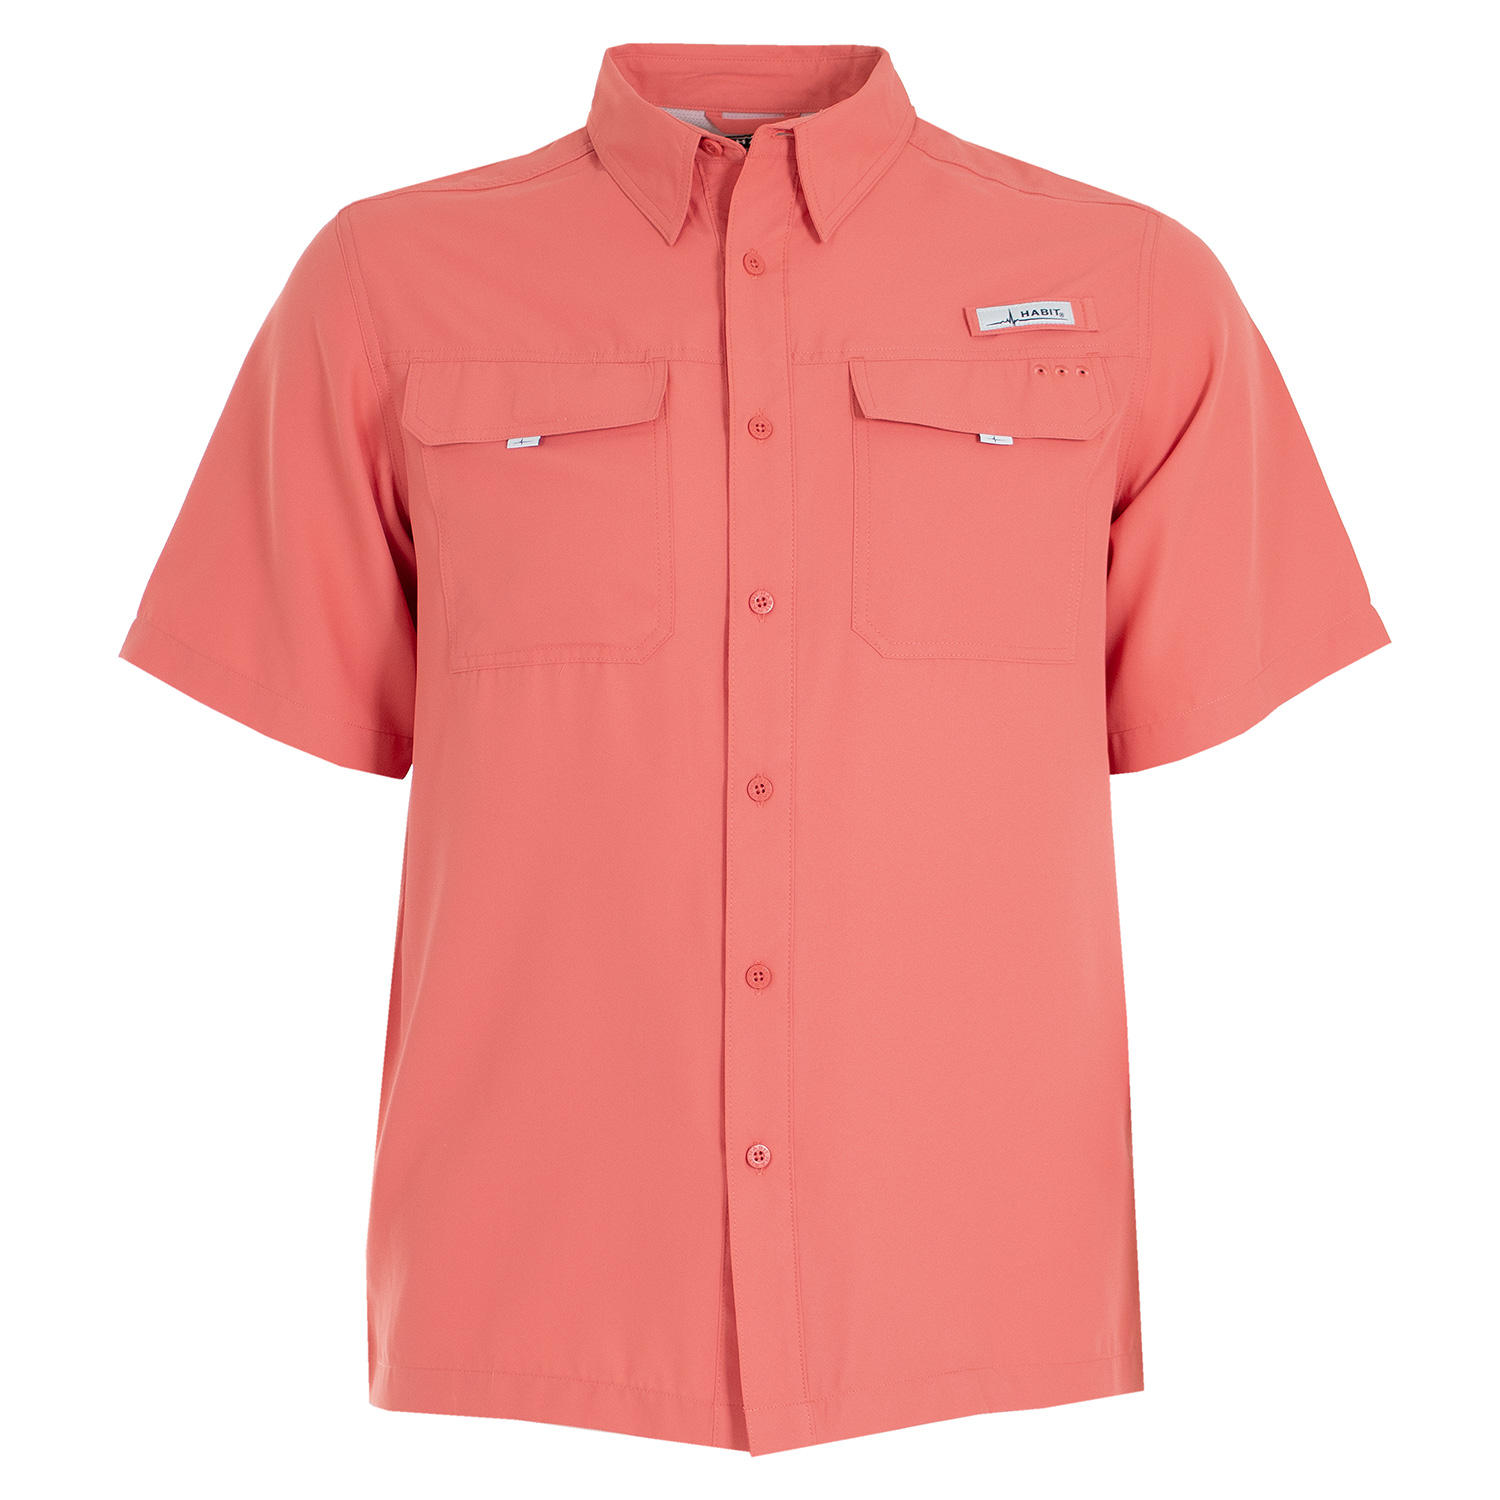 Habit Men's UPF 40+ UV Protection Short-Sleeve Fishing Shirt - Spiced Coral XL